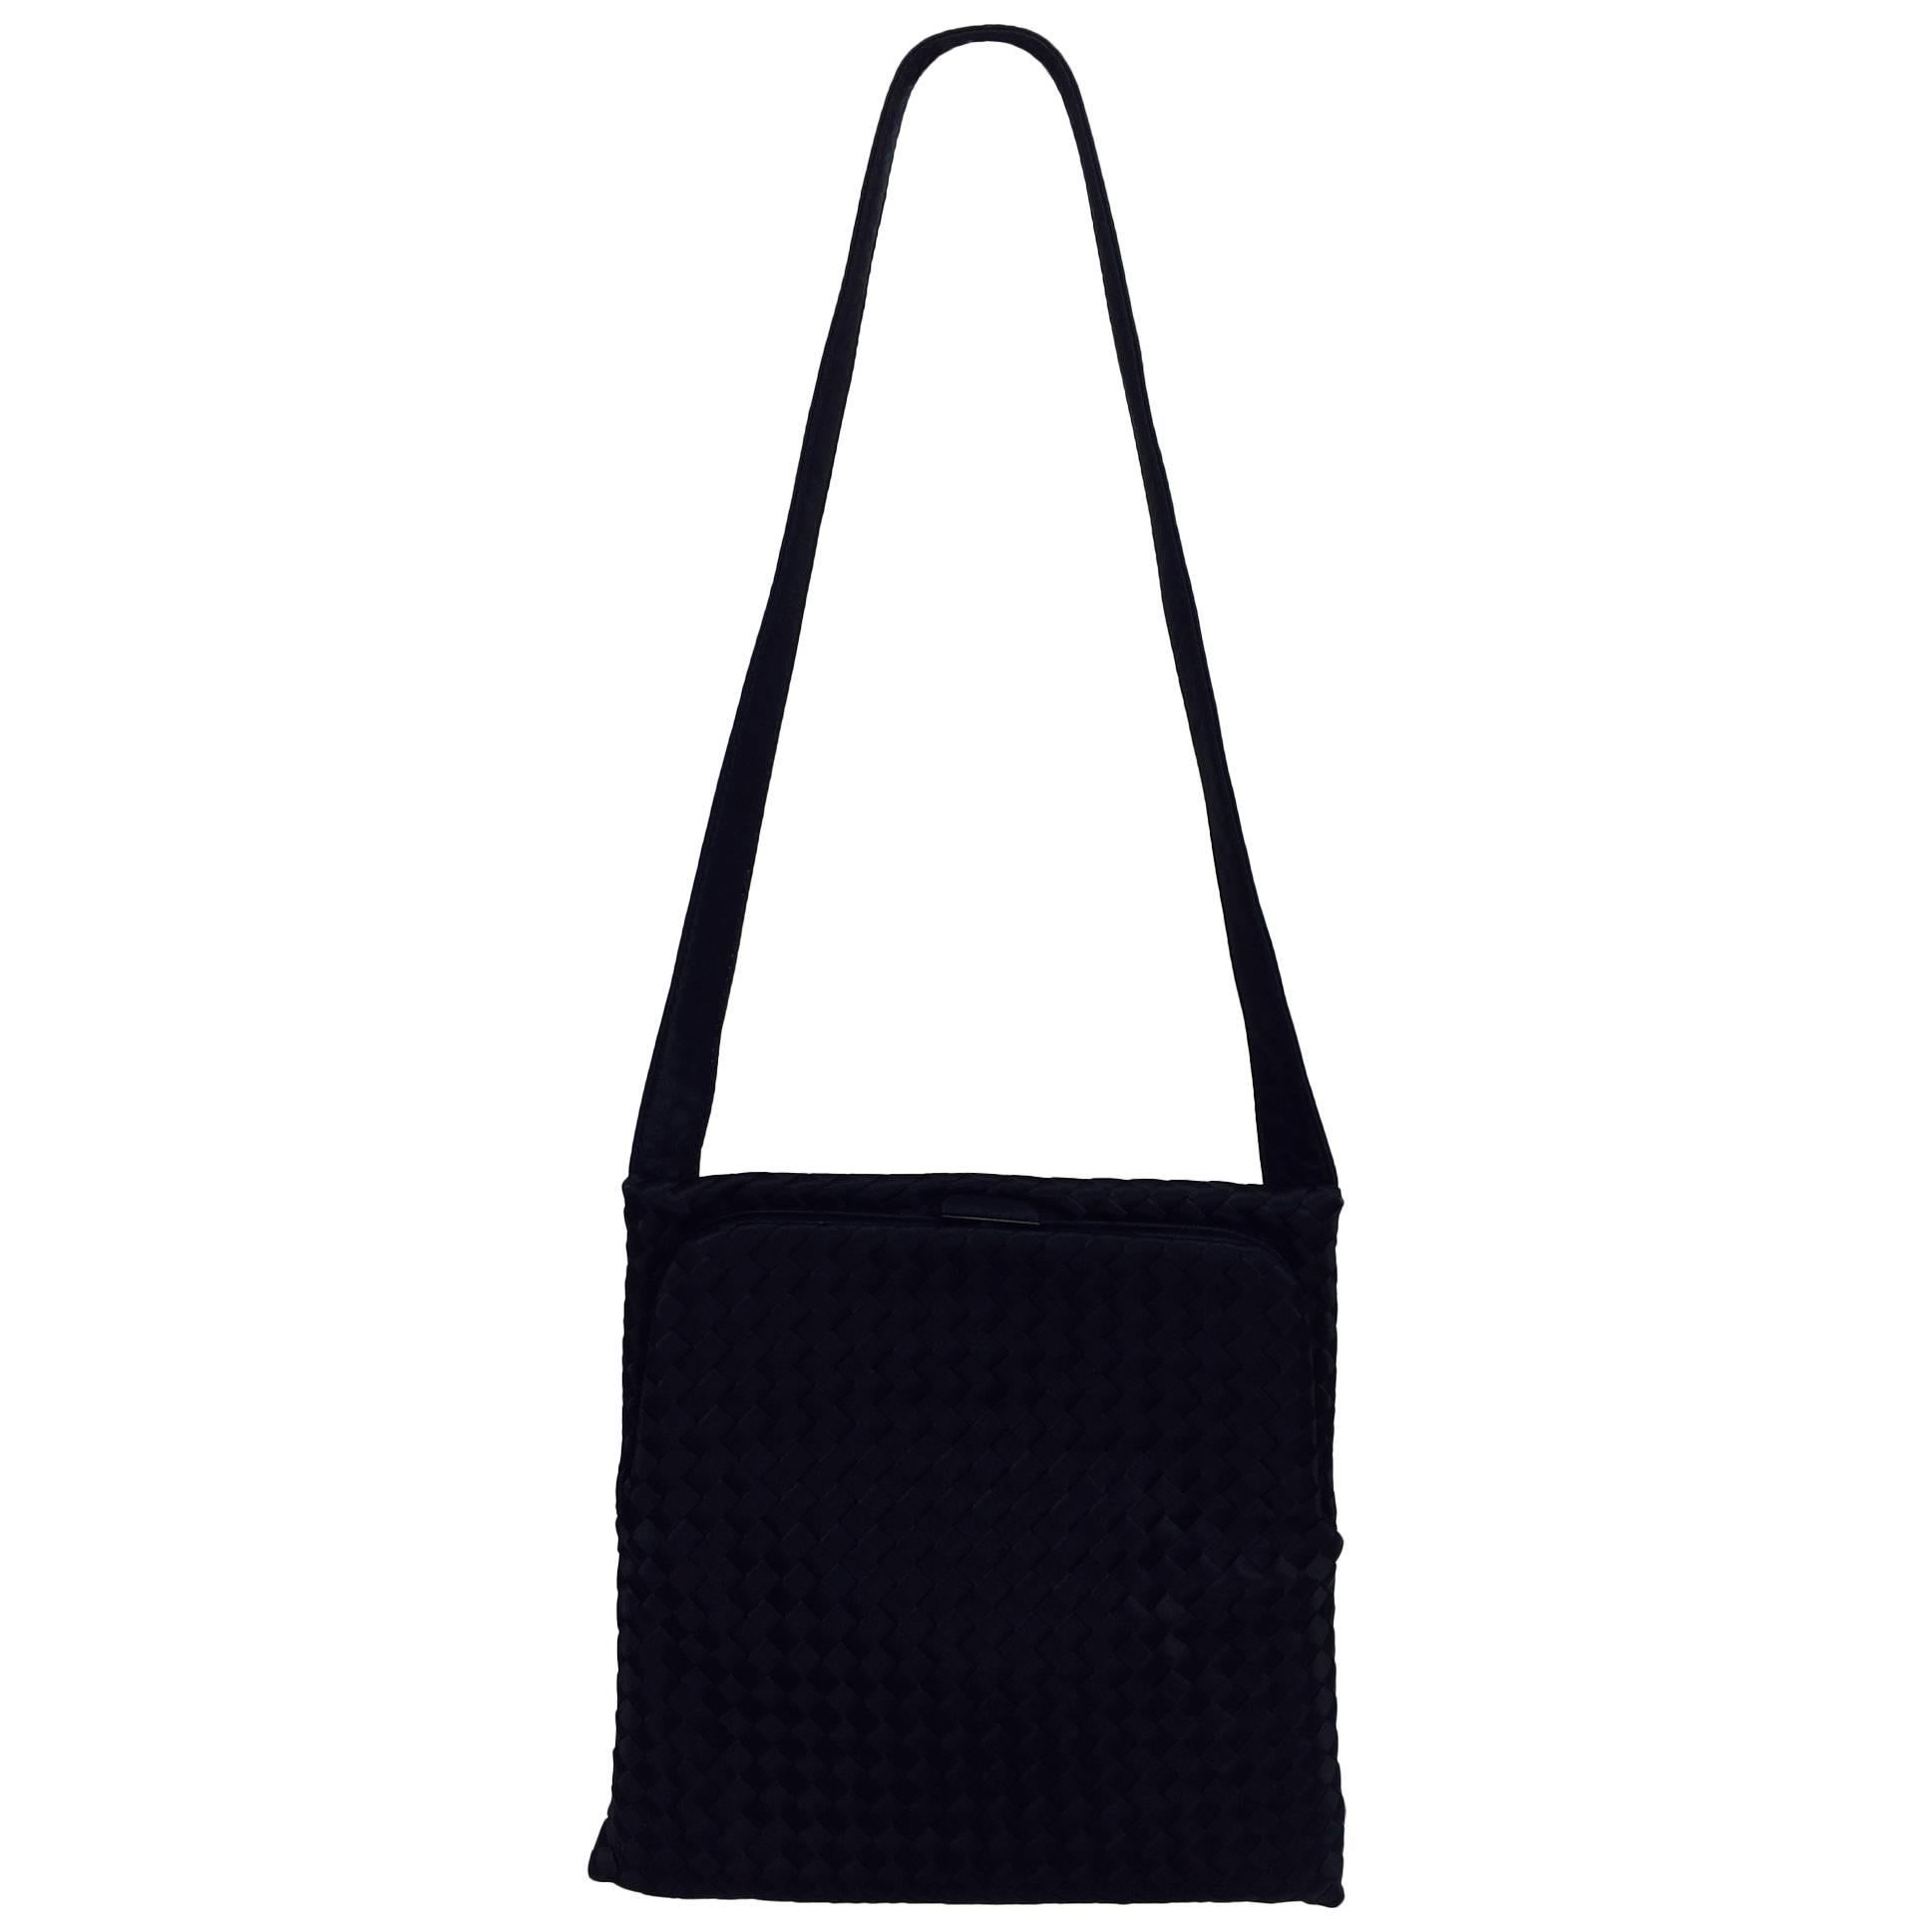 Bottega Veneta black silk satin Intrecciato shoulder bag handbag 